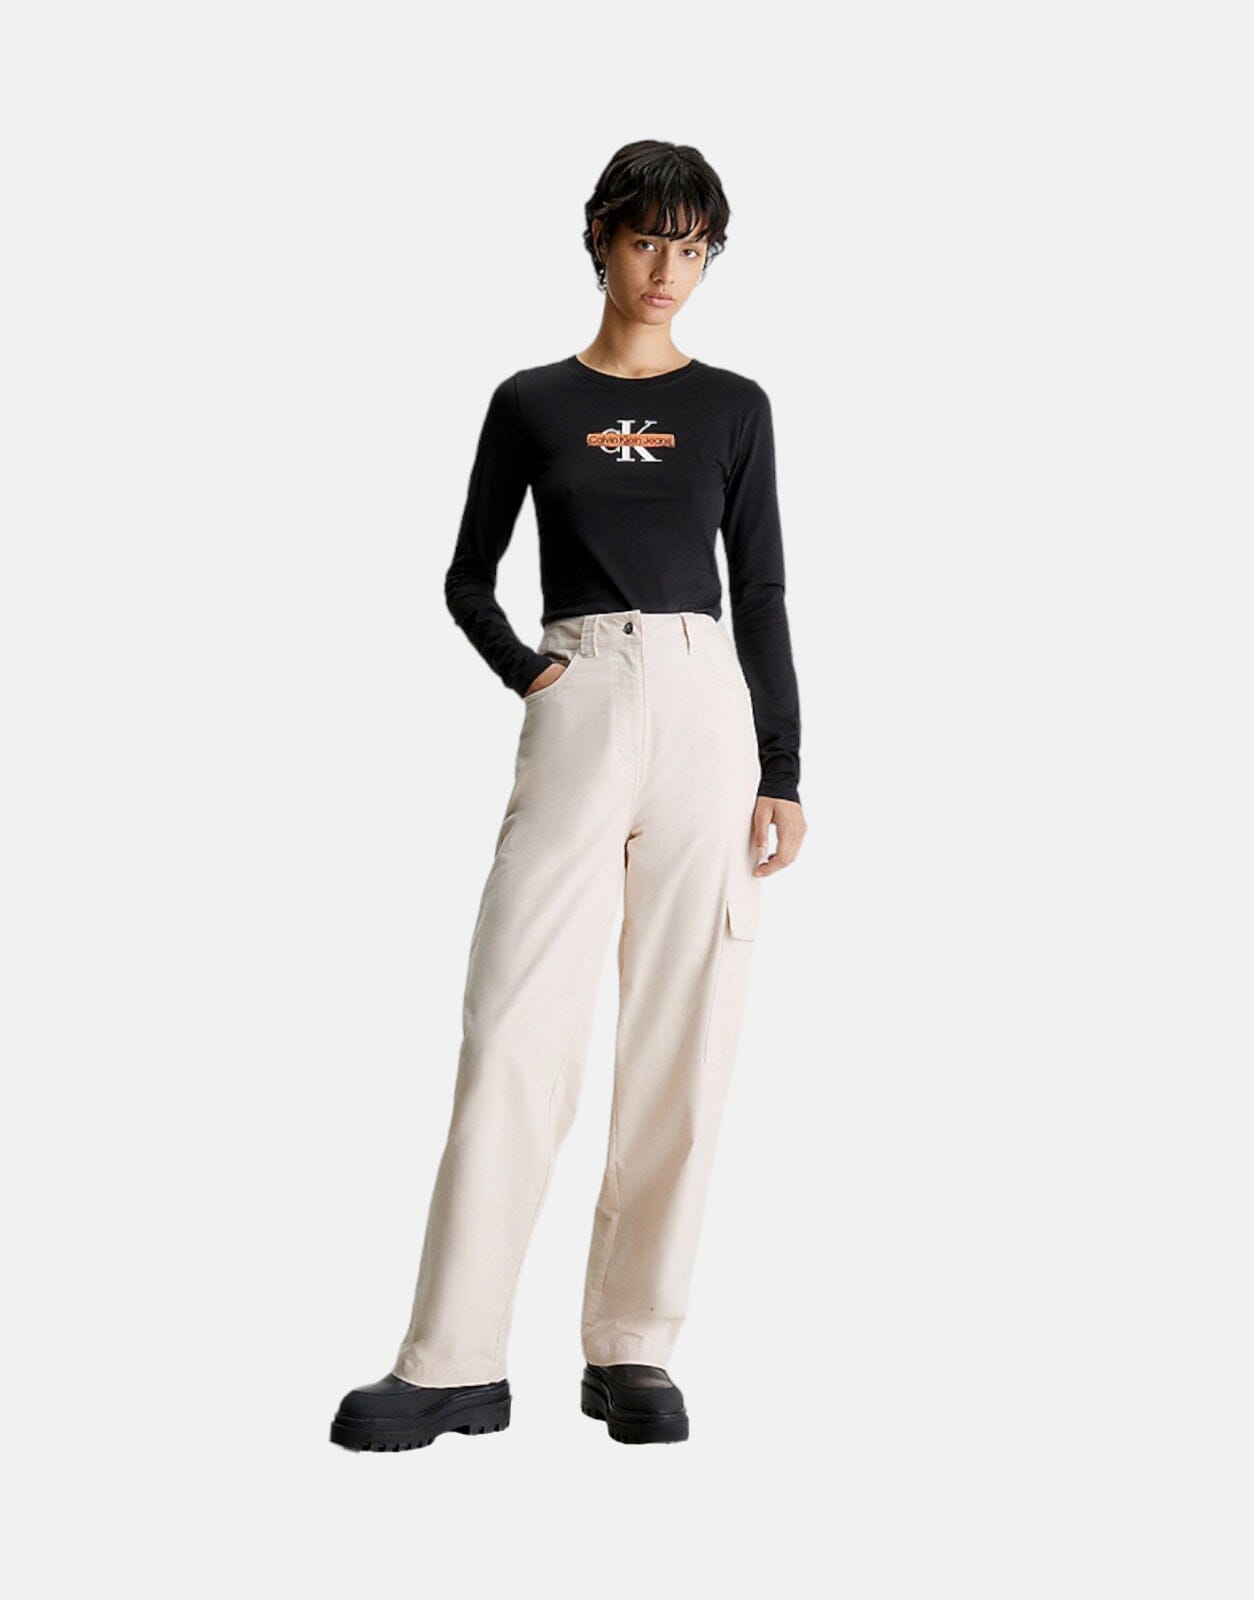 Calvin Klein Seasonal Monologo Long Sleeve T-Shirt - Subwear